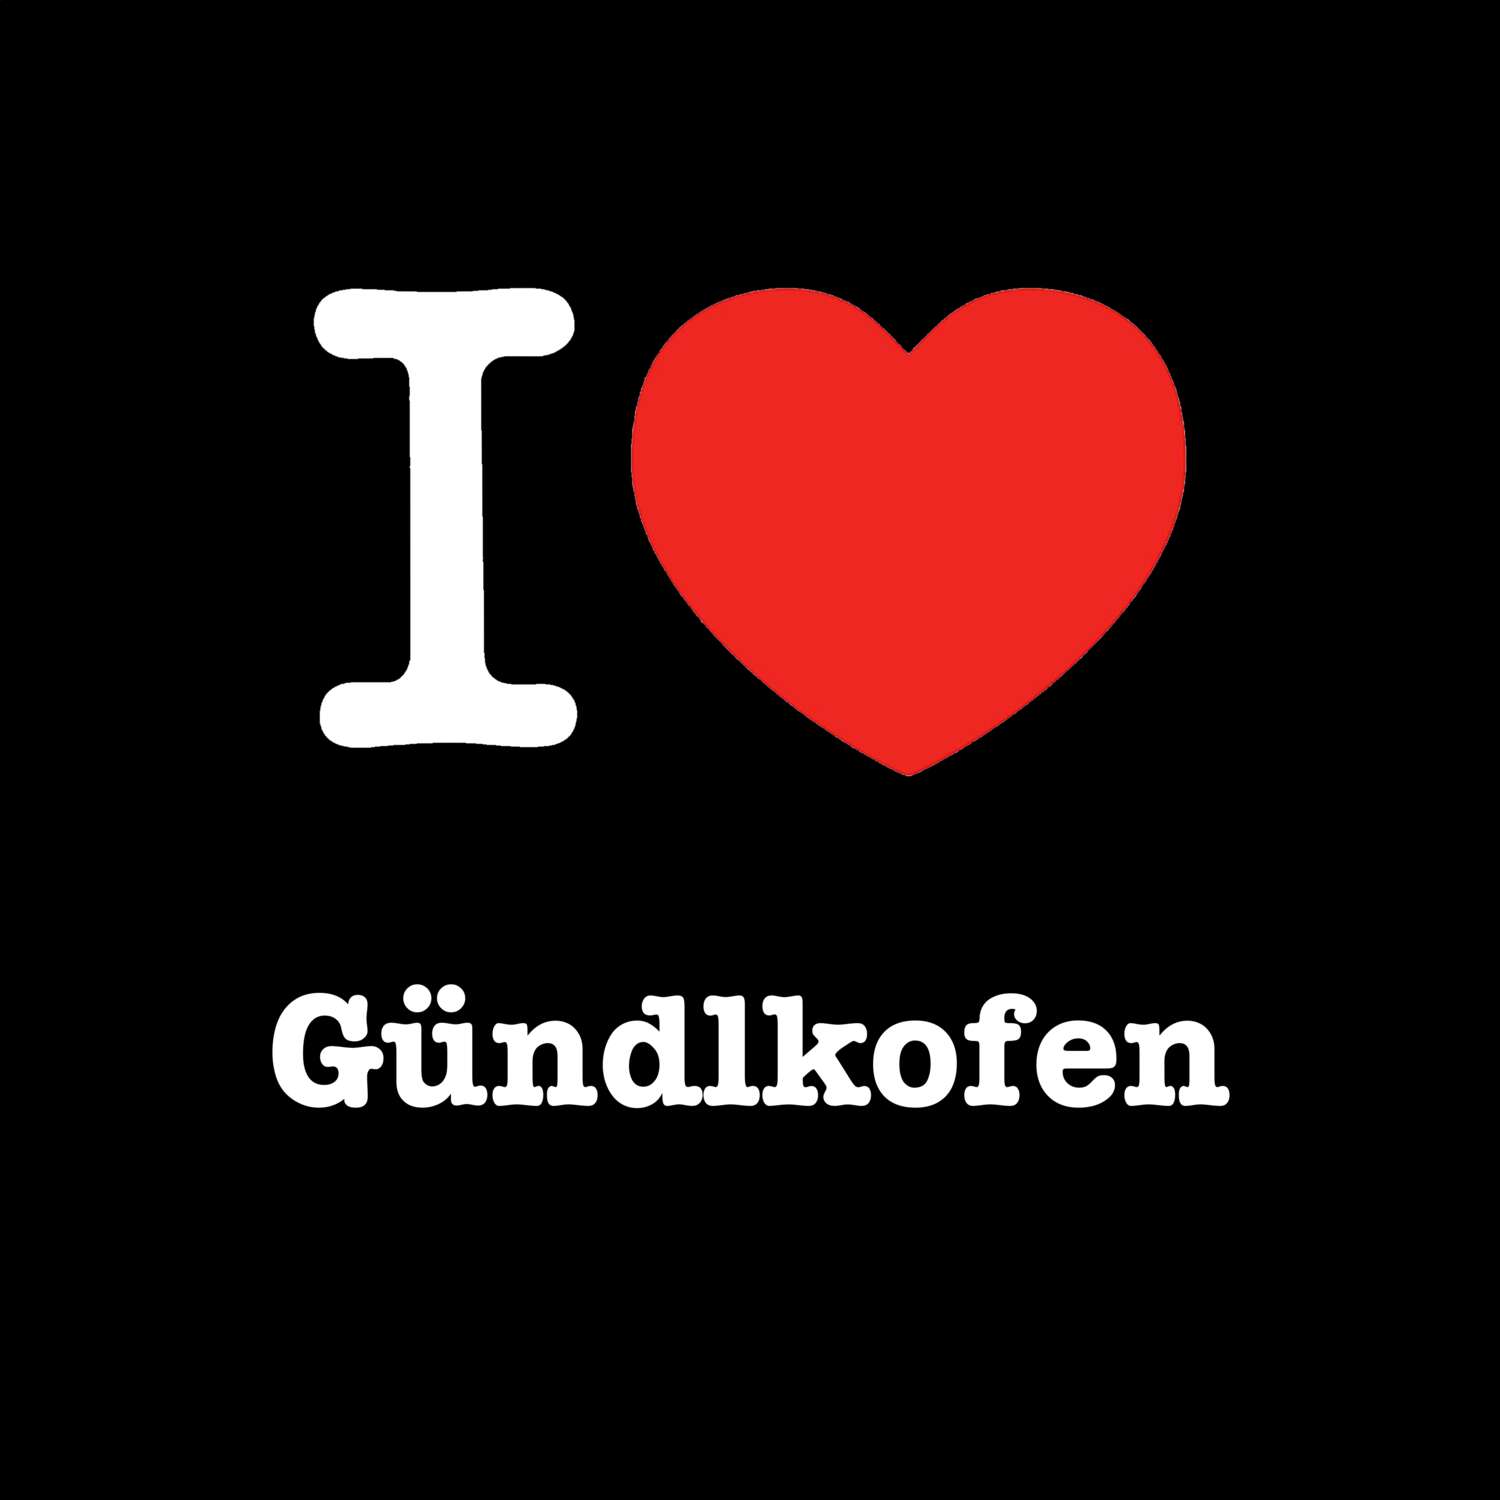 Gündlkofen T-Shirt »I love«